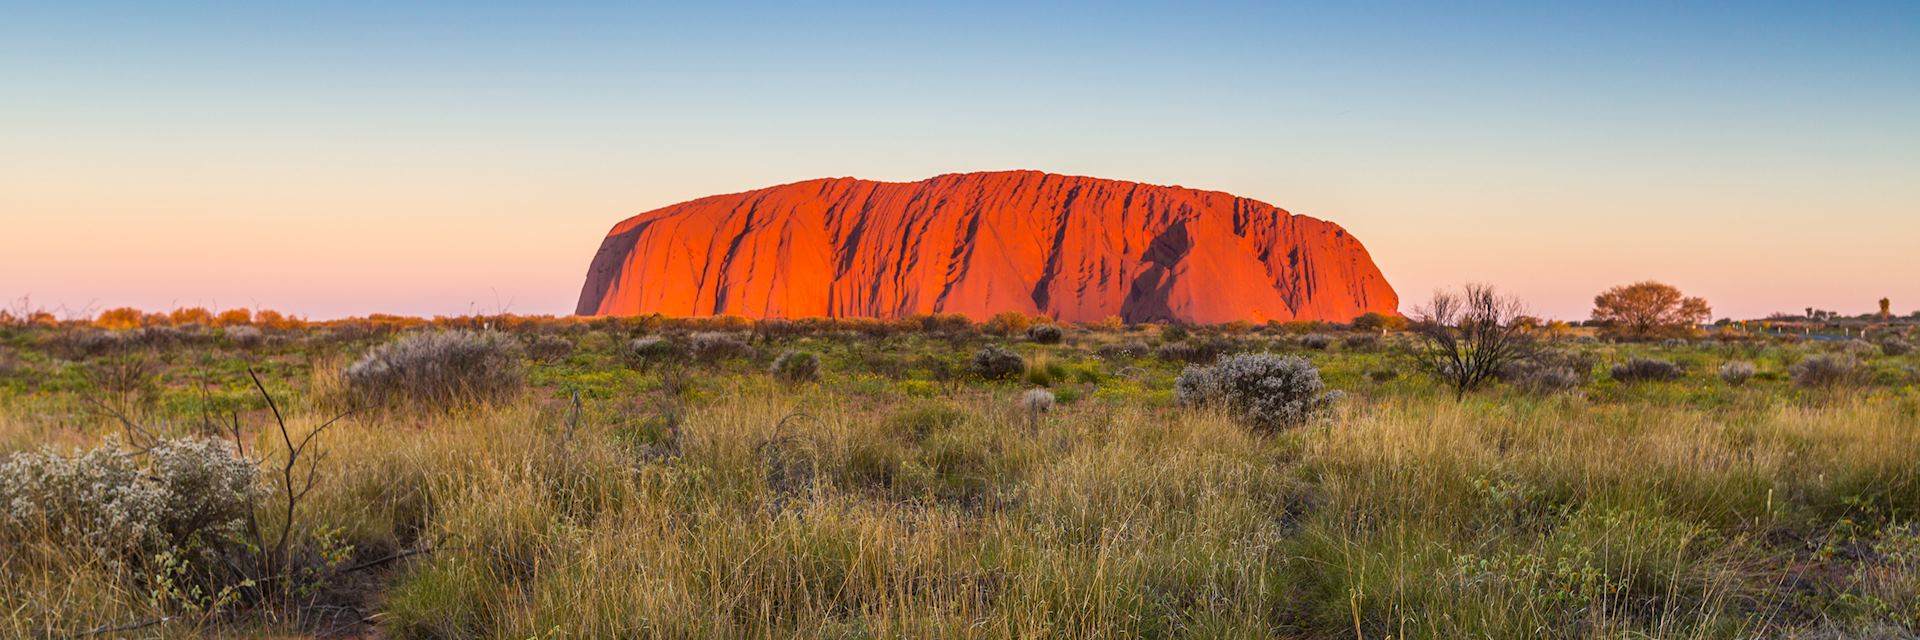 Uluru-Kata Tjuta Sacred Red Rocks of Australia’s Heart